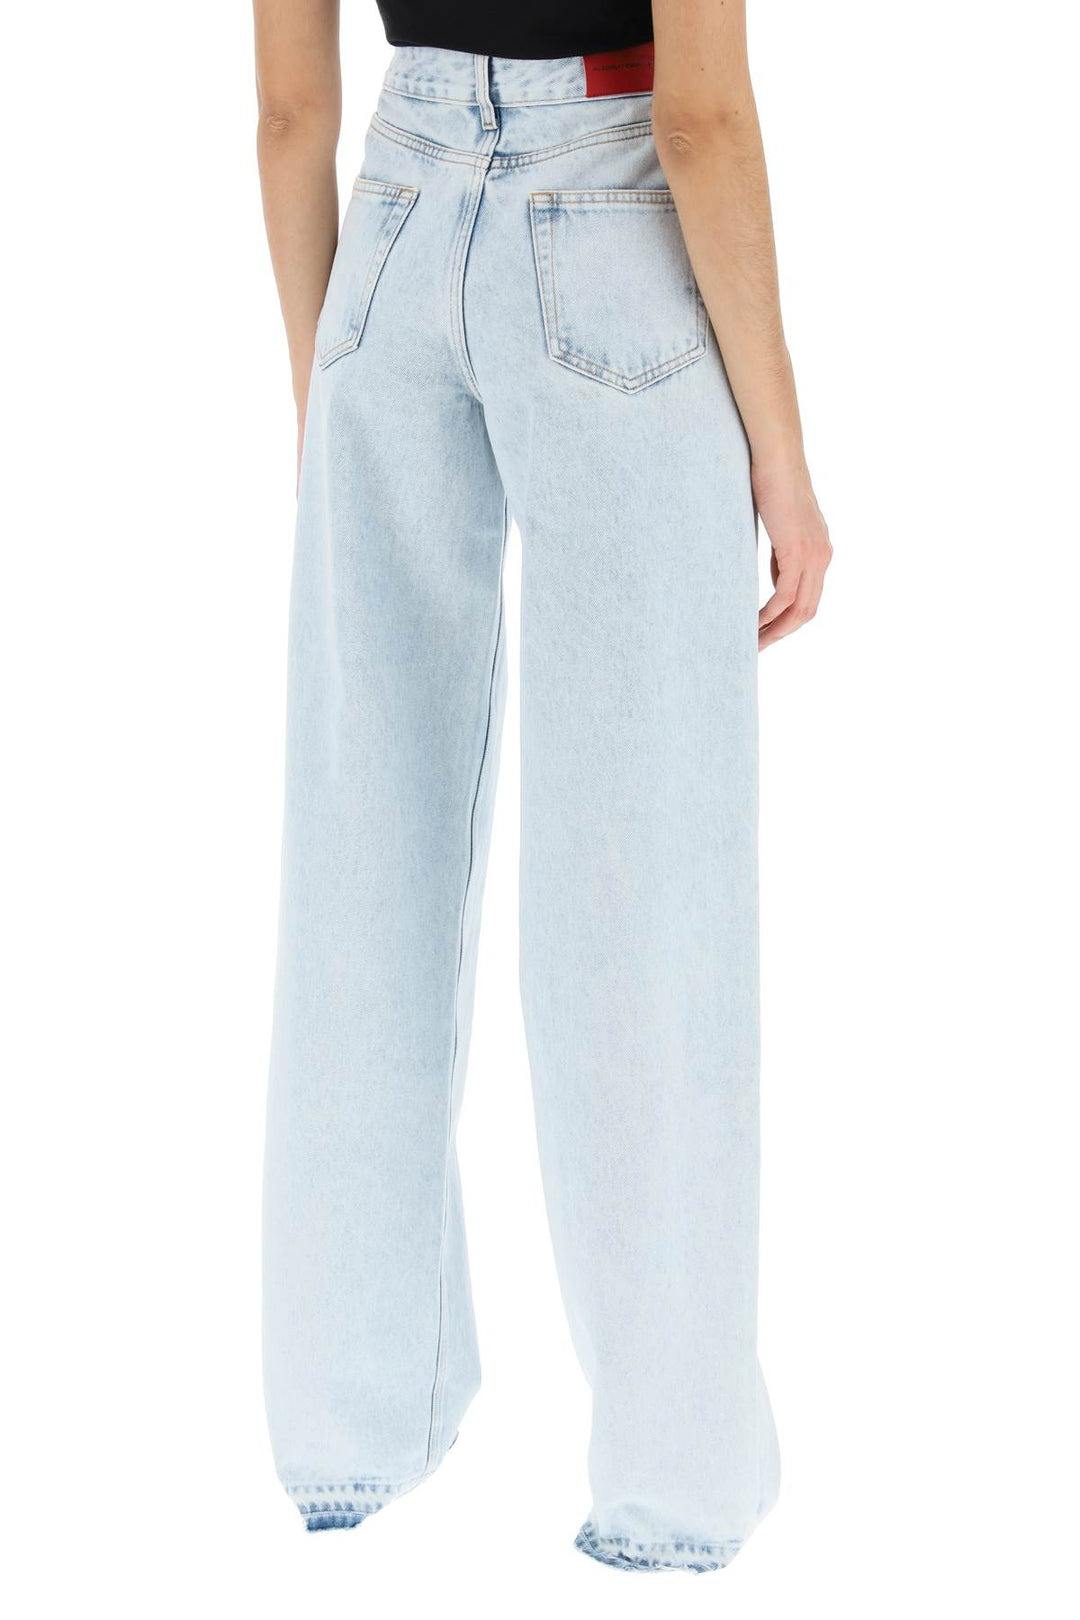 Alessandra Rich Jeans With Studs   Celeste